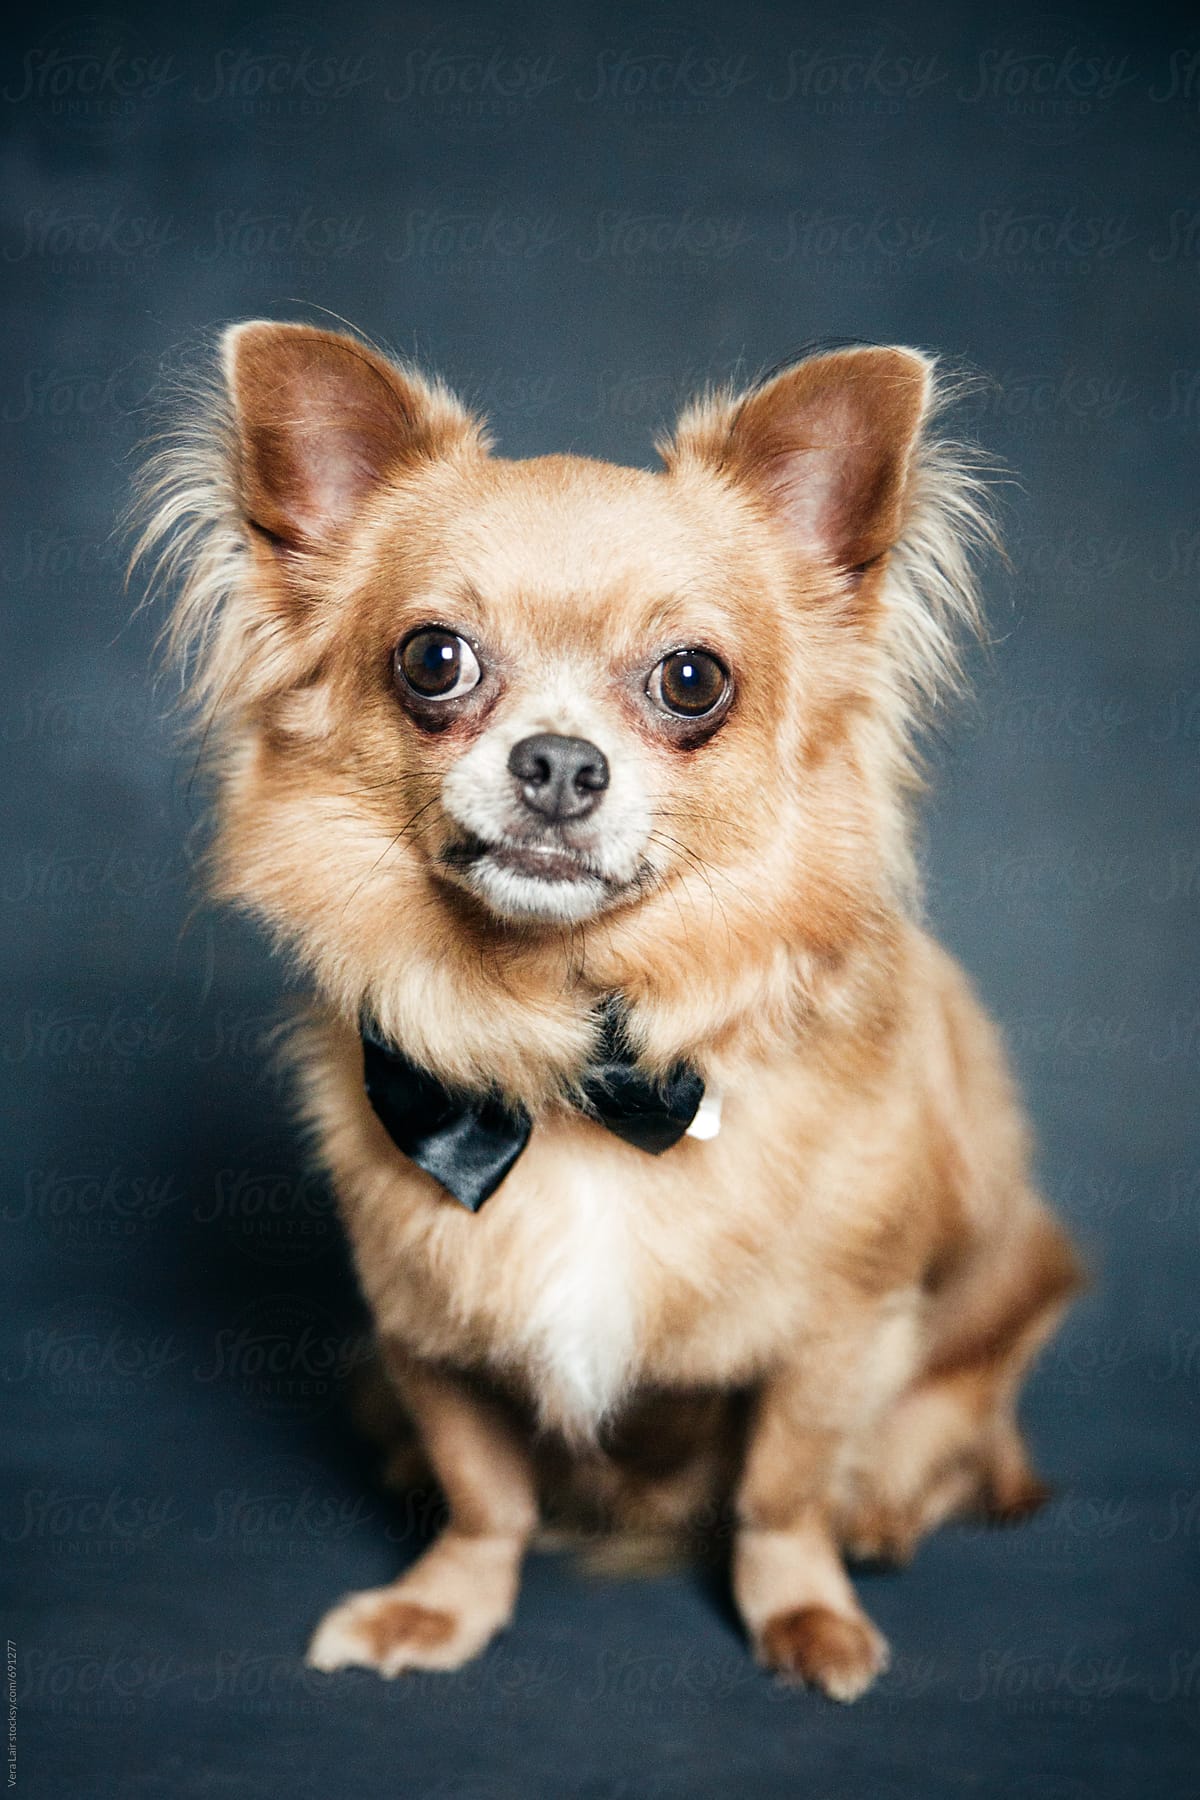 Portrait of a cute tiny dog